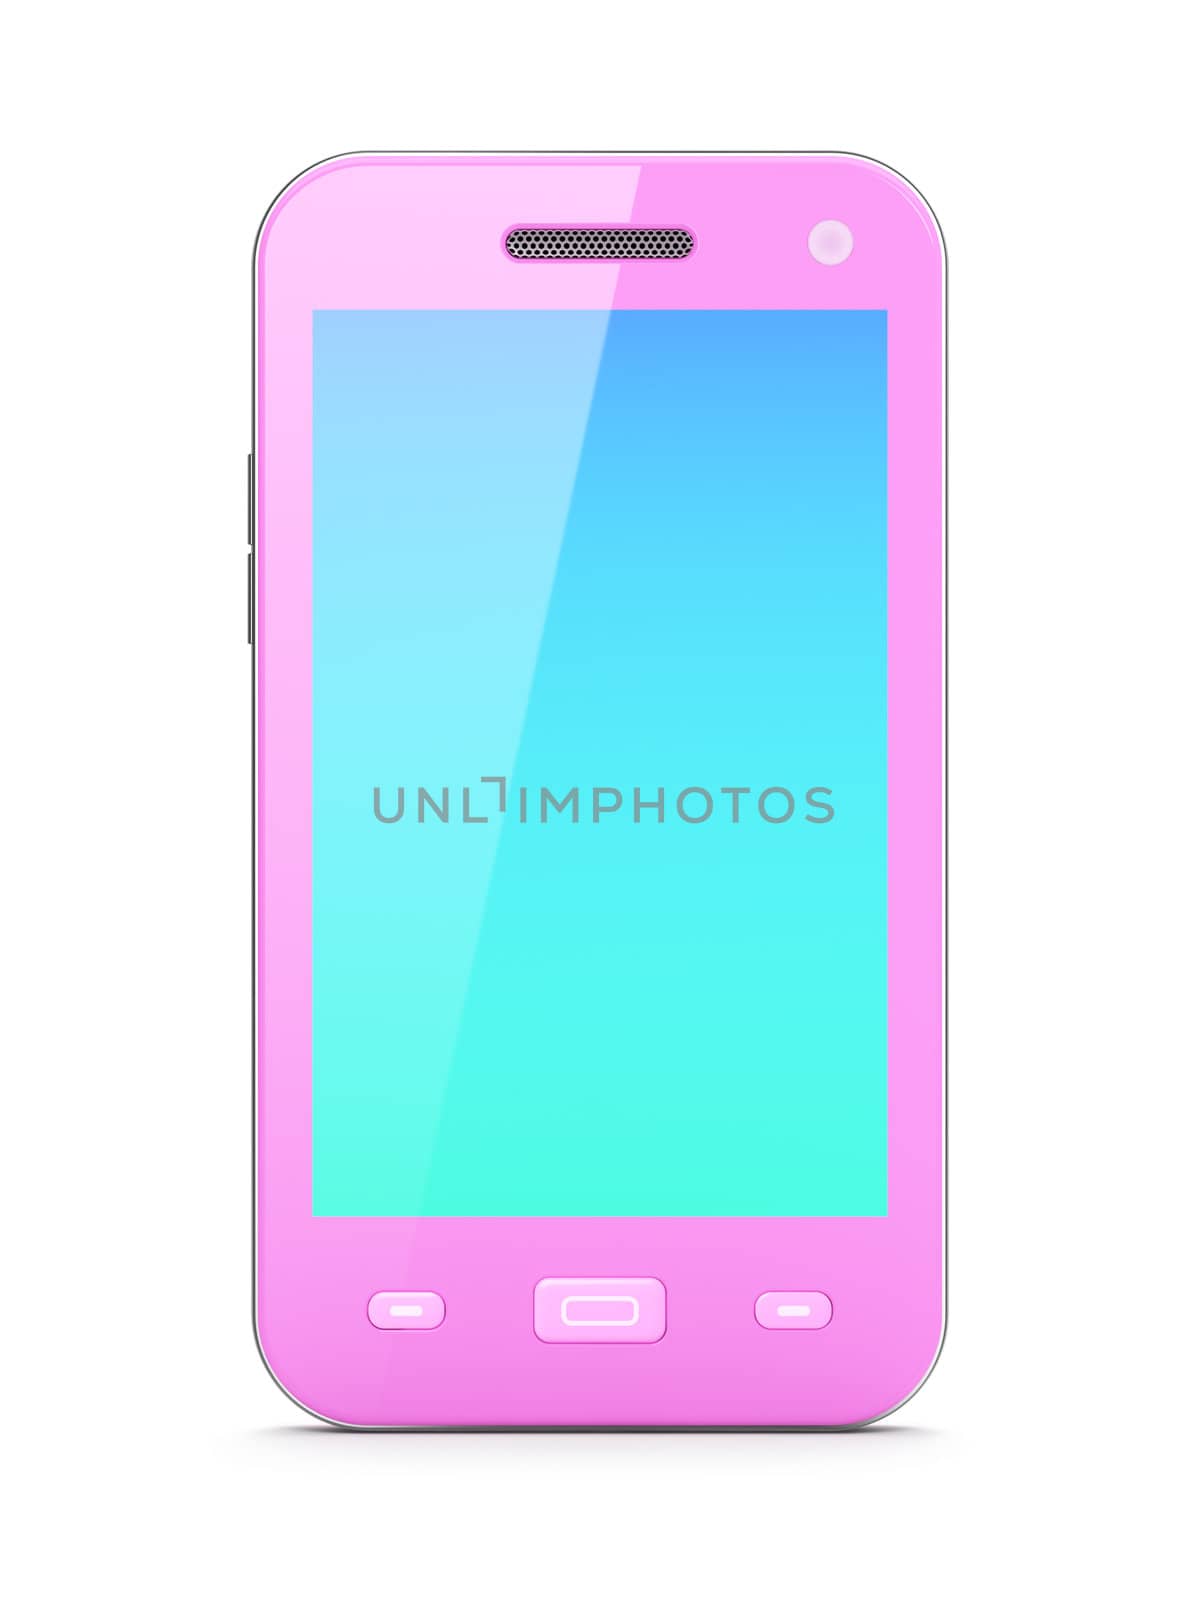 Beautiful pink smartphone on white background by maxkabakov